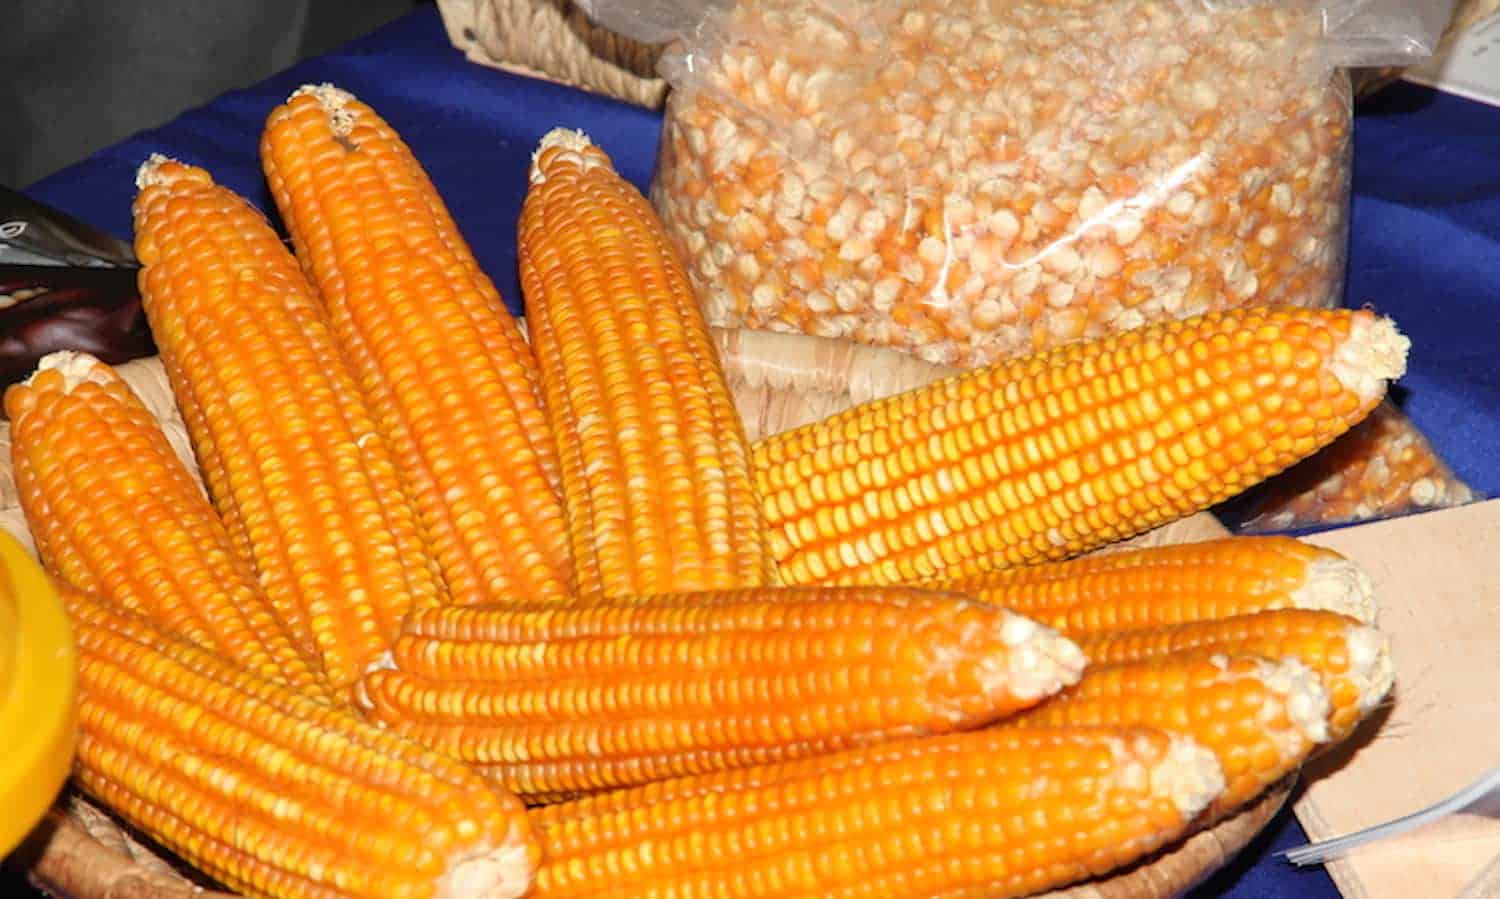 CORAF研究项目的重点农业部门发现对生产者的需求可以提高玉米产量。